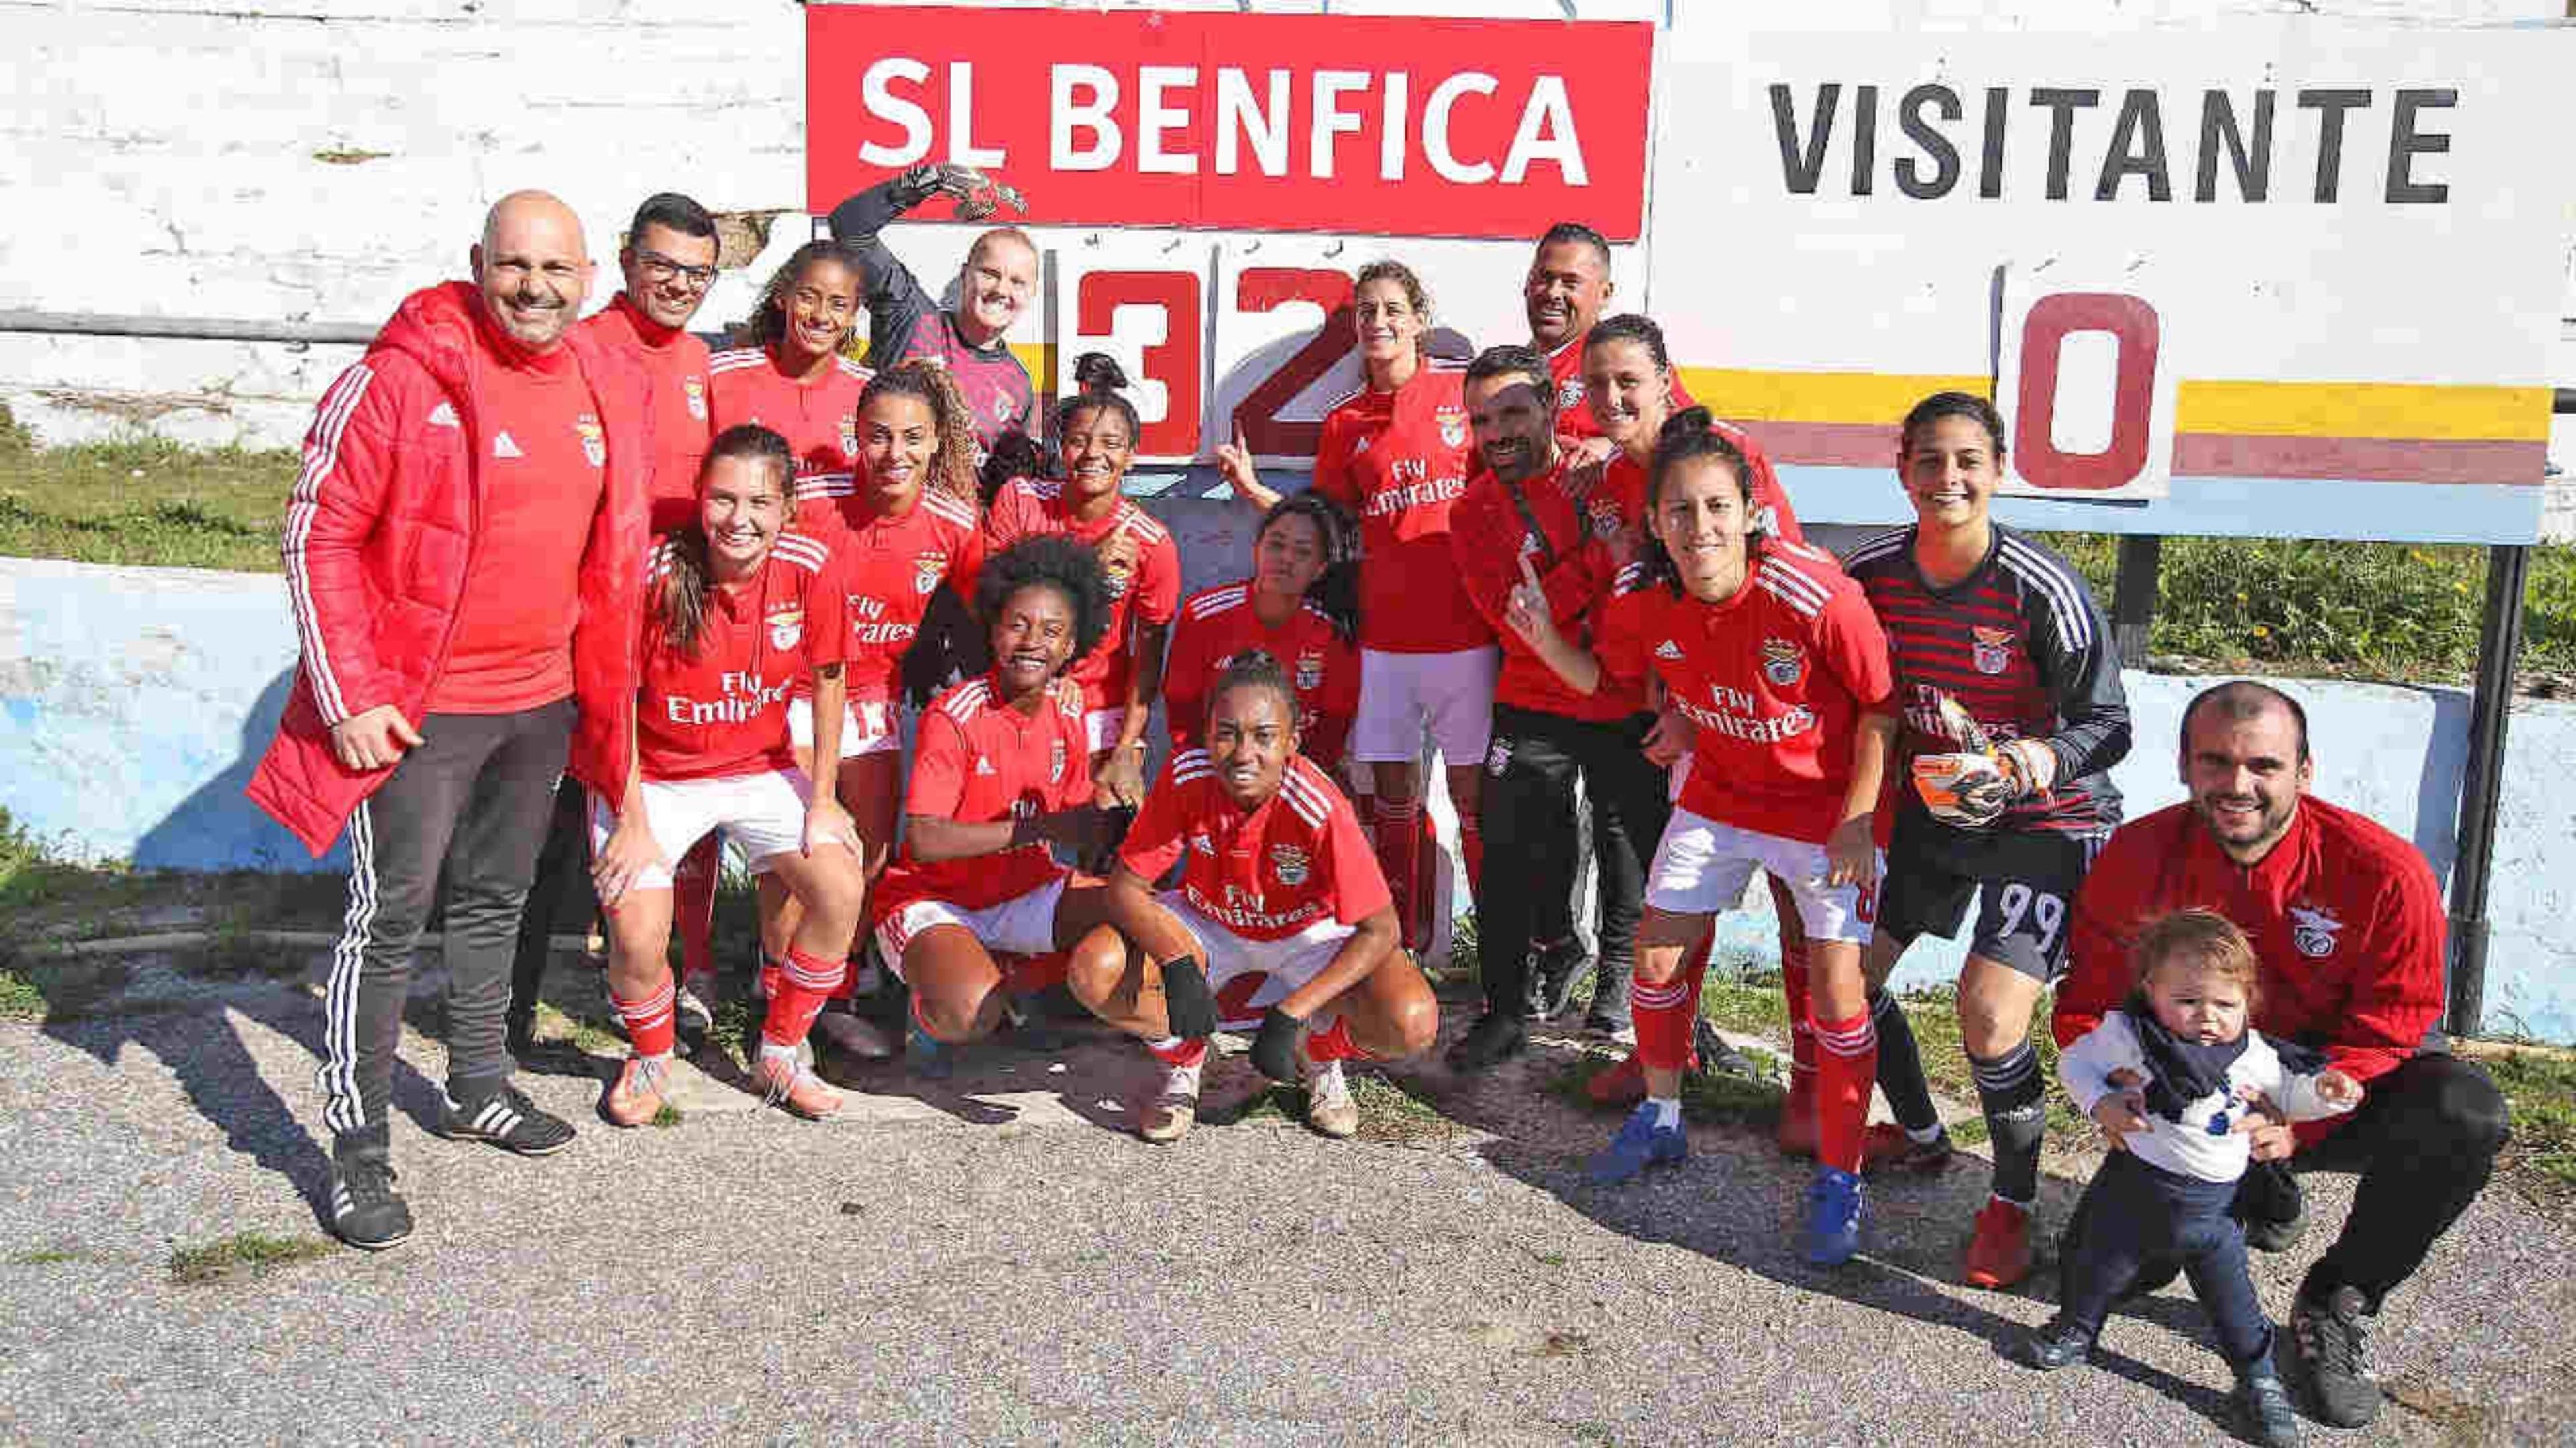 Benfica women's team